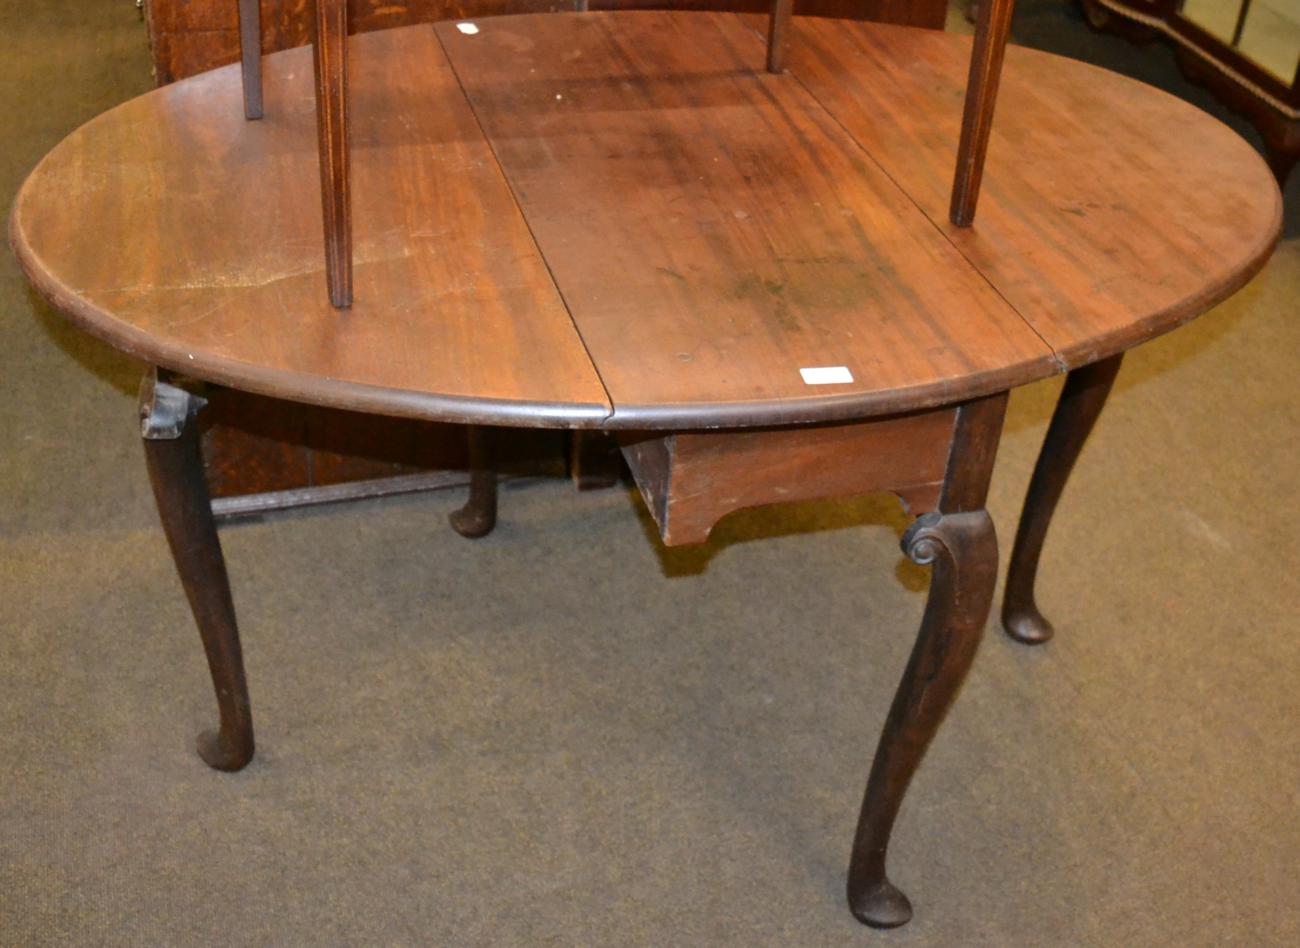 An early 19th century mahogany drop leaf gateleg table